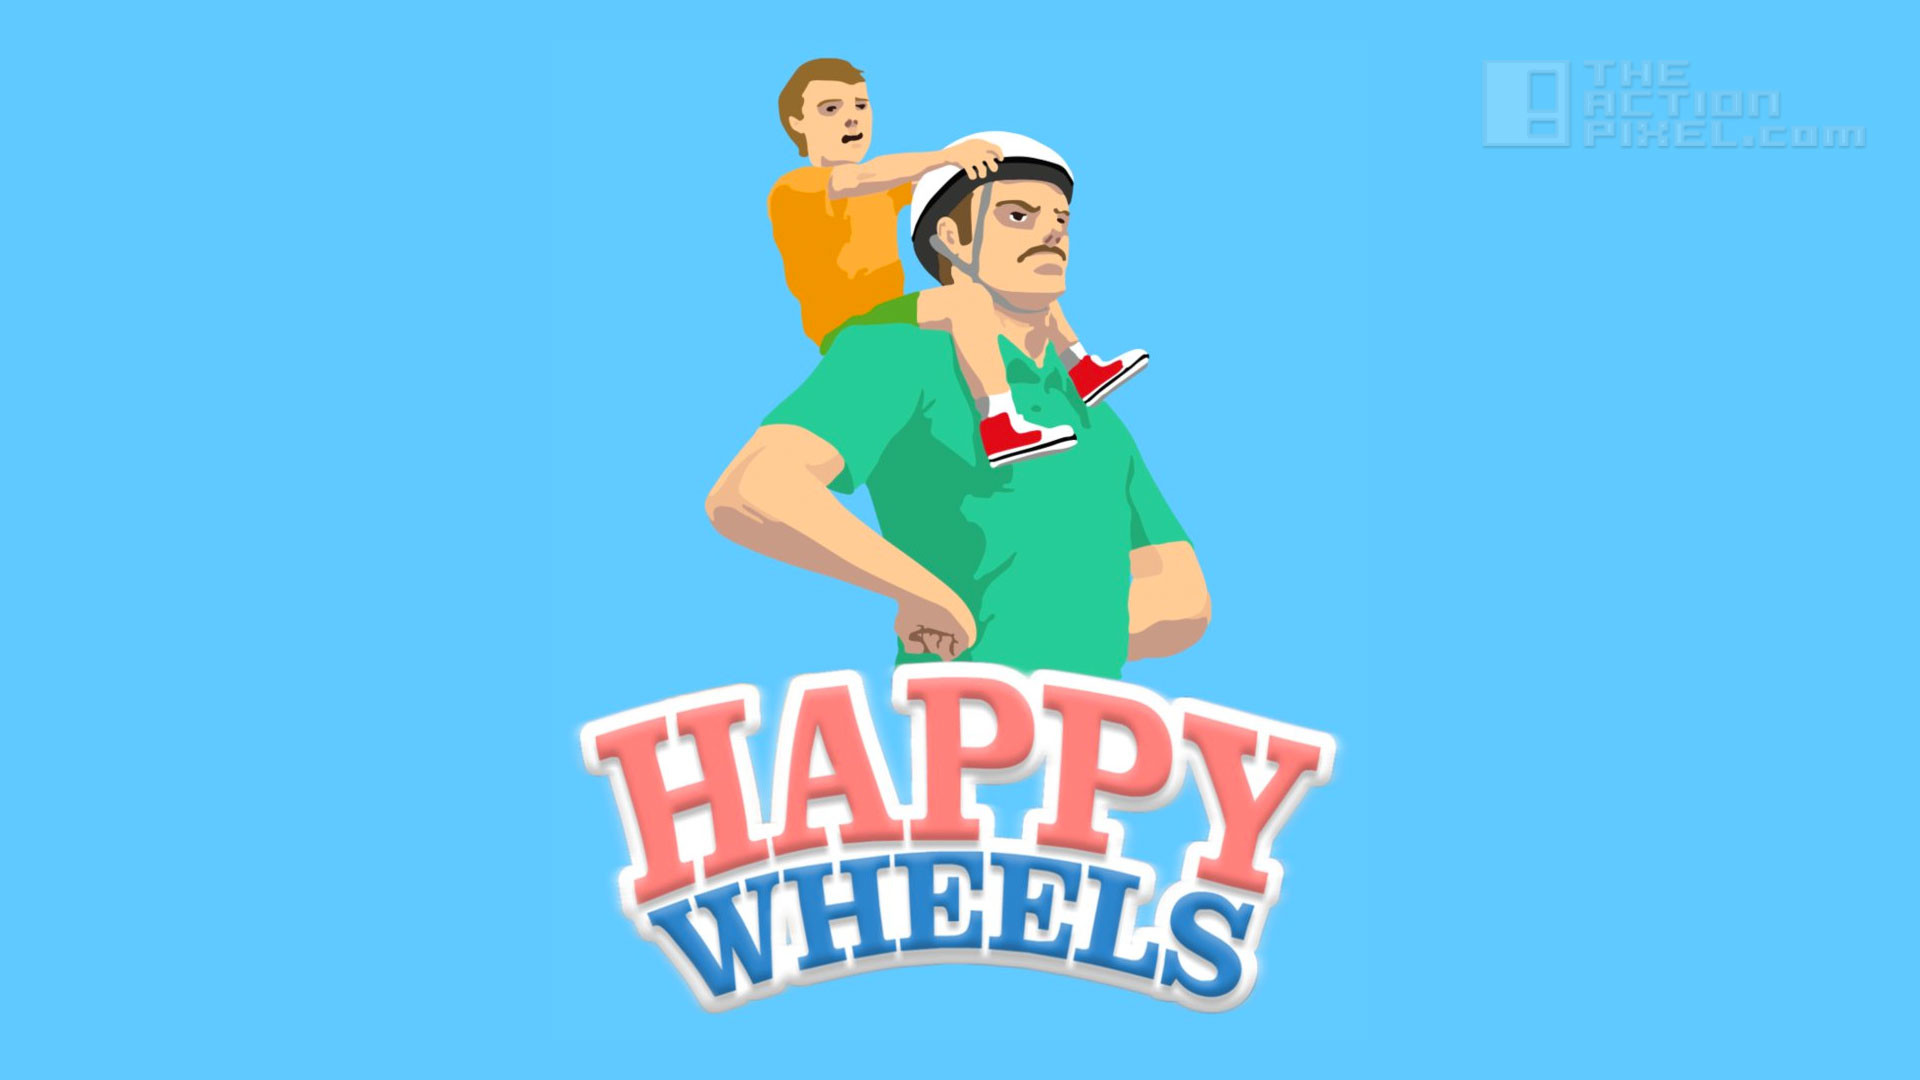 Happy wheels full game download mac catalina